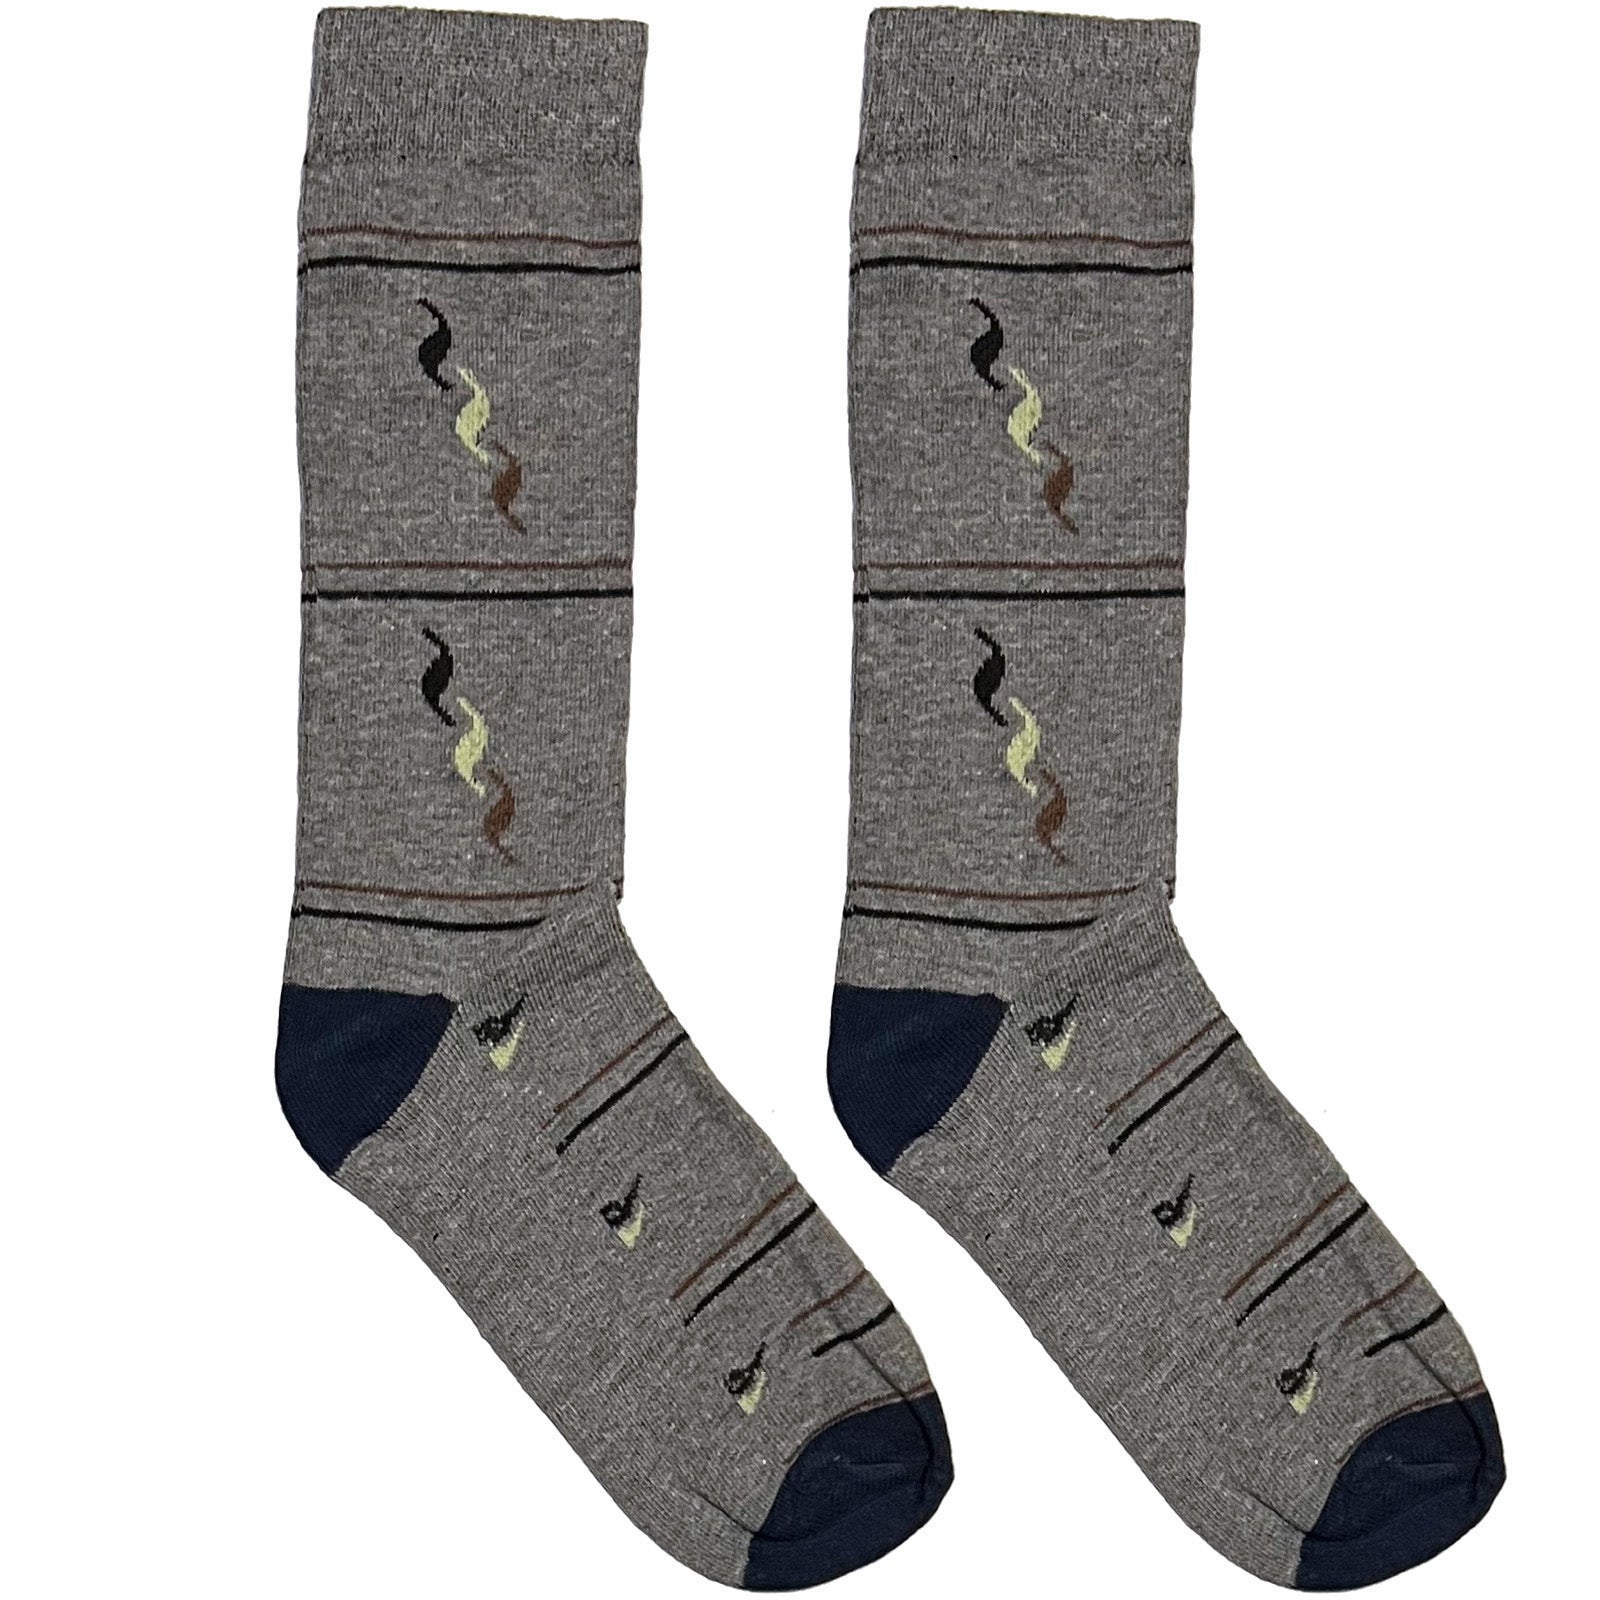 Grey And Black Flame Socks